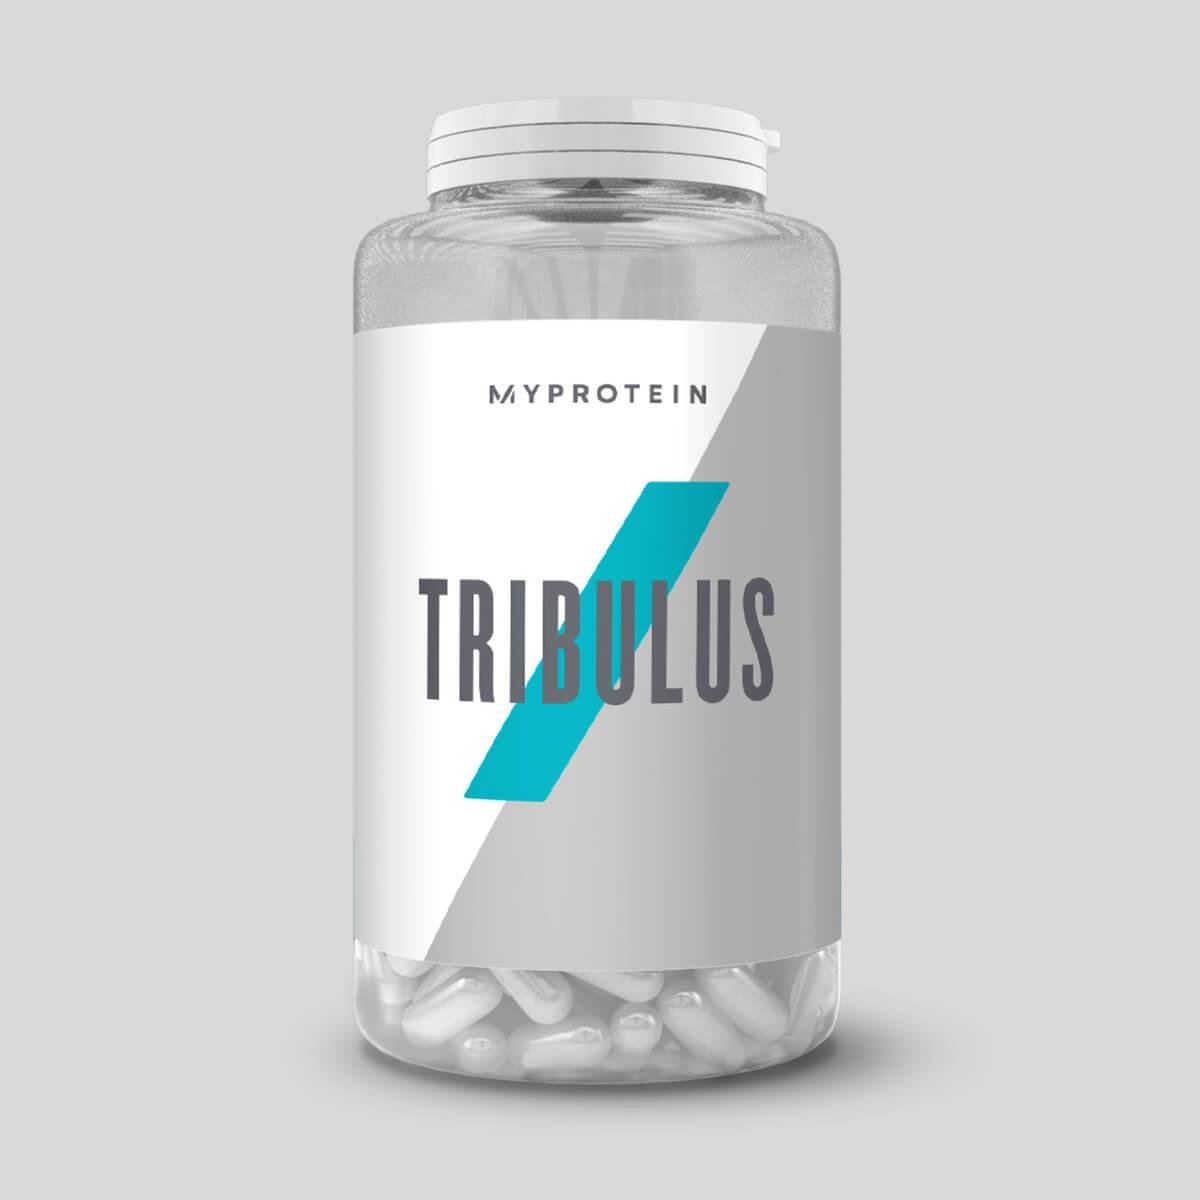 MyProtein Tribulus Pro (95% saponin) 90 caps,  мл, MyProtein. Бустер тестостерона. Поддержание здоровья Повышение либидо Aнаболические свойства Повышение тестостерона 